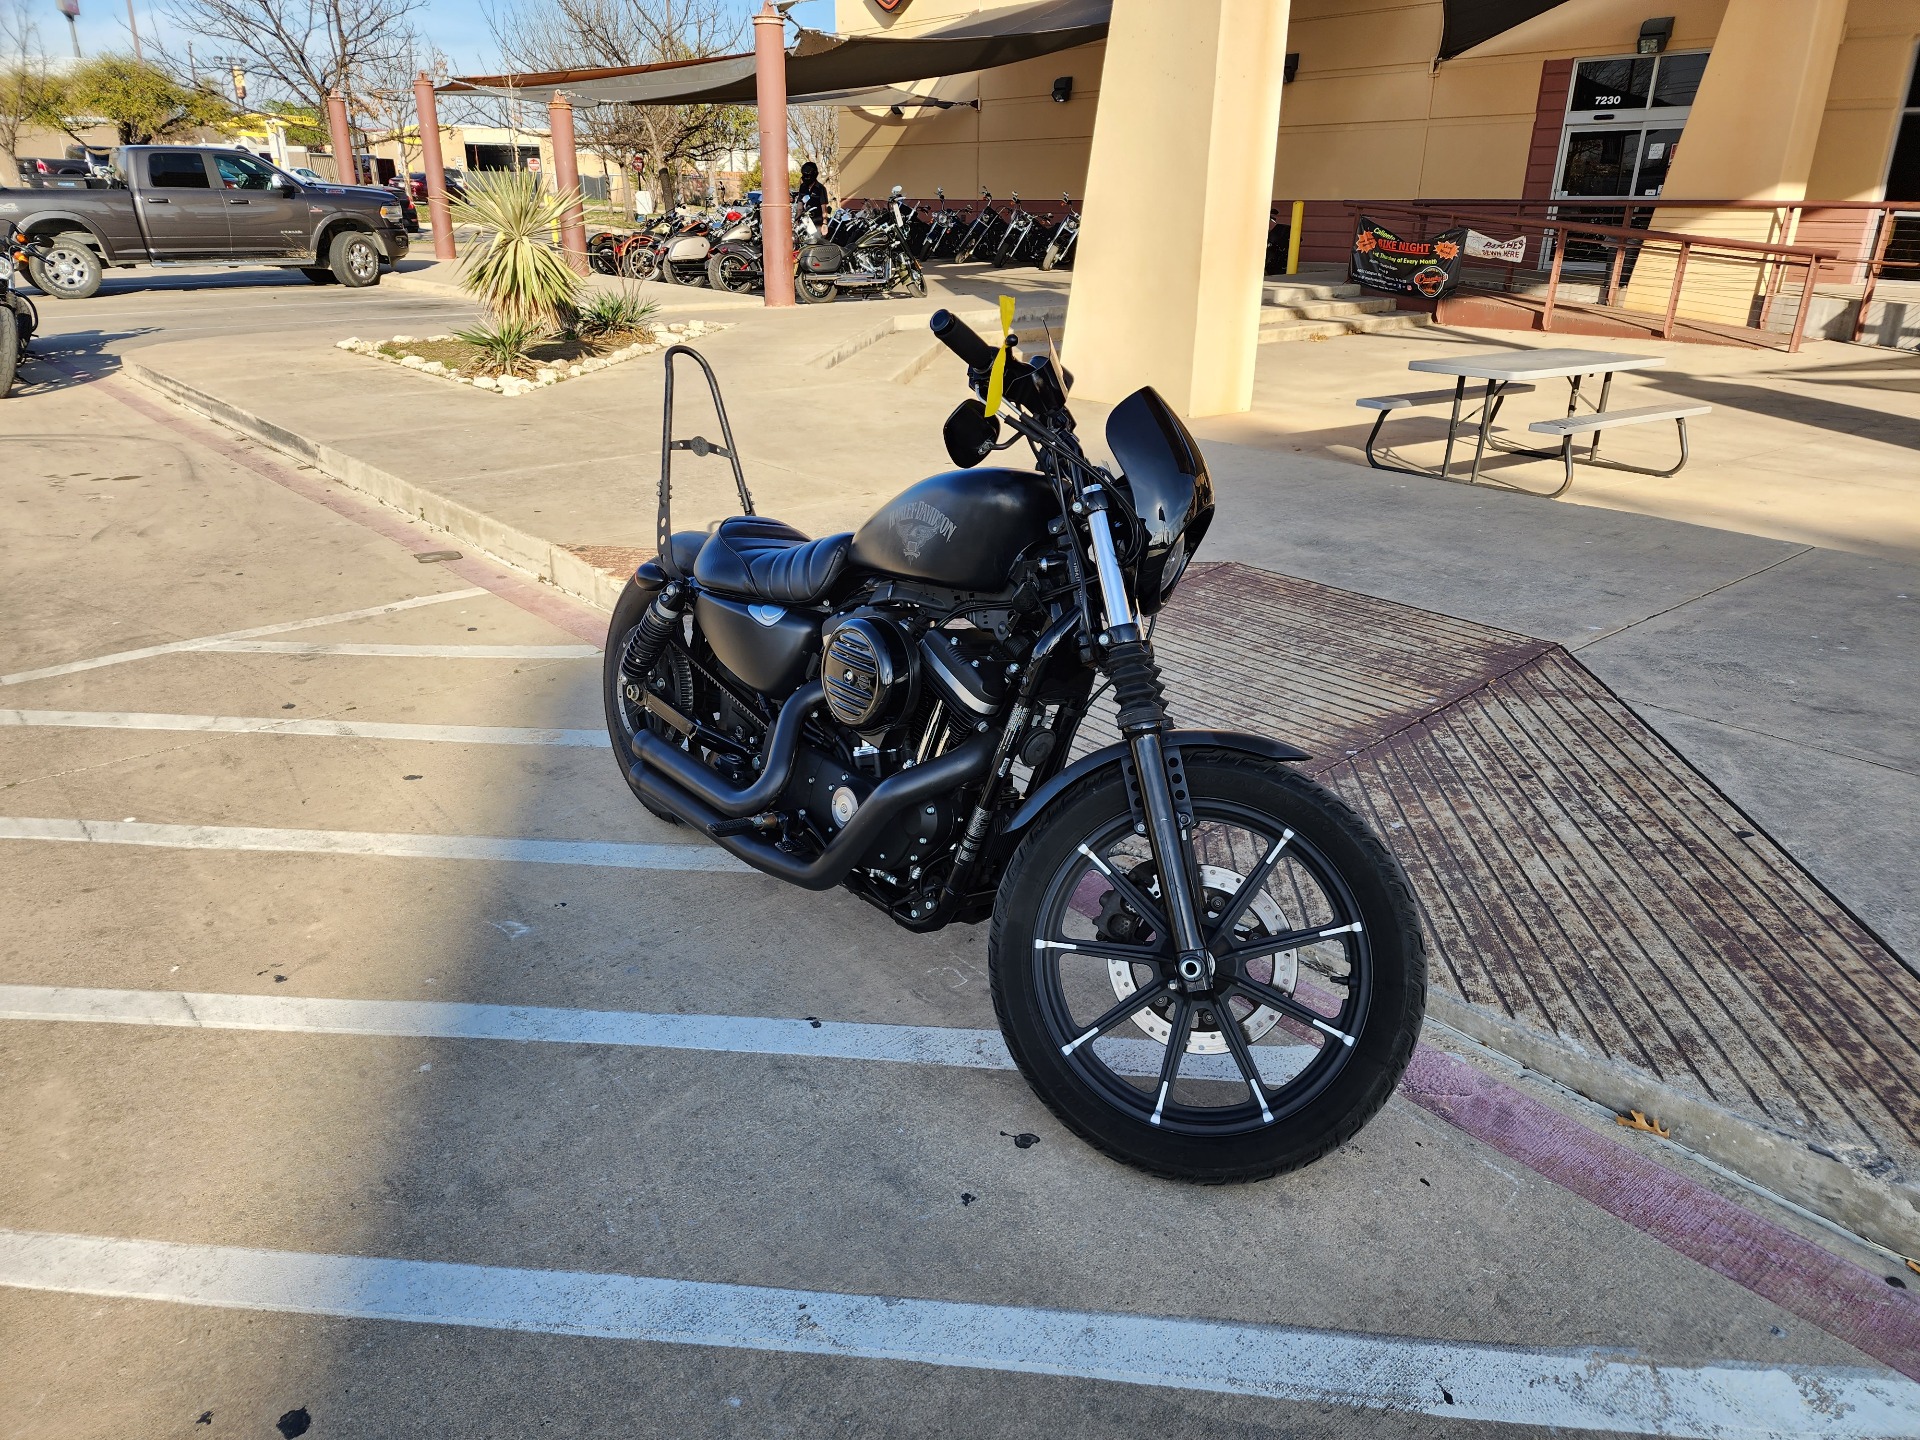 2016 Harley-Davidson Iron 883™ in San Antonio, Texas - Photo 2